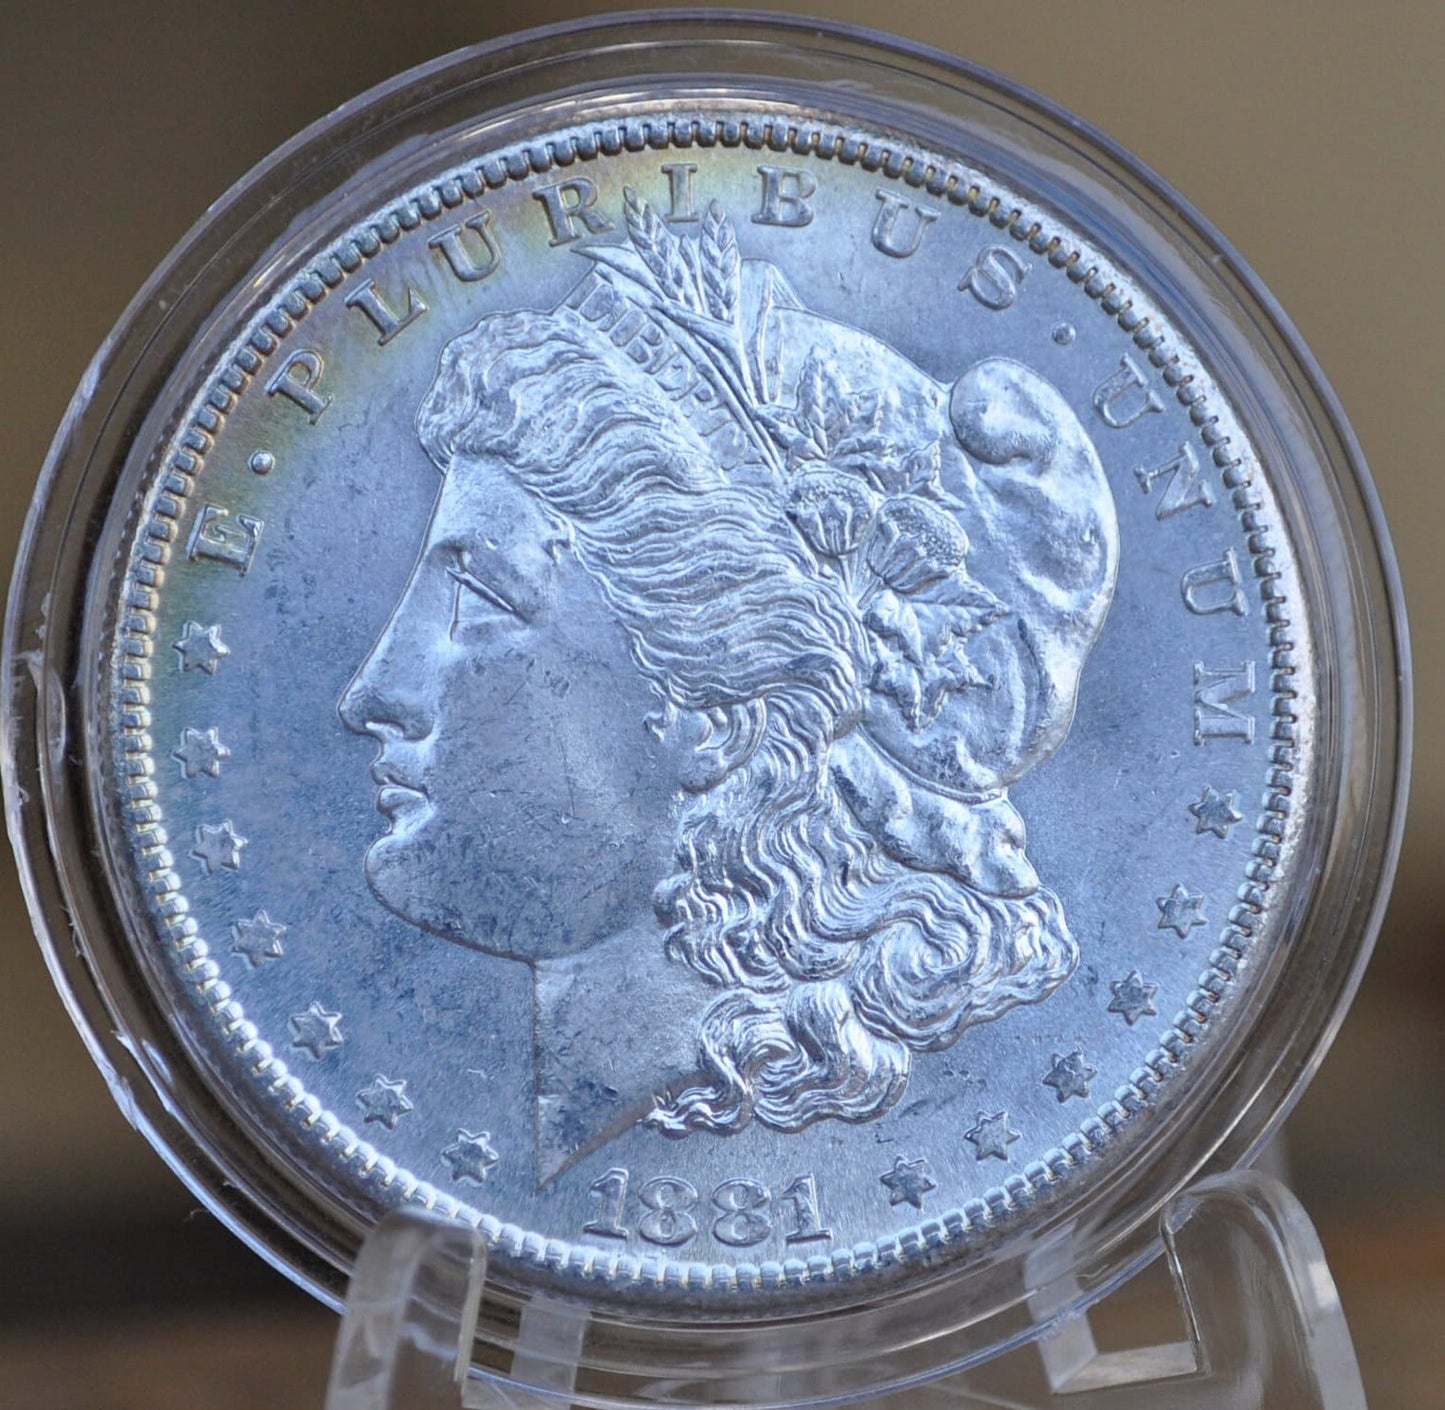 1881-S Morgan Silver Dollar - MS60/BU (Uncirculated) Grade, Beautiful Mint Luster - San Francisco Mint - 1881 S Morgan Dollar - High Grade